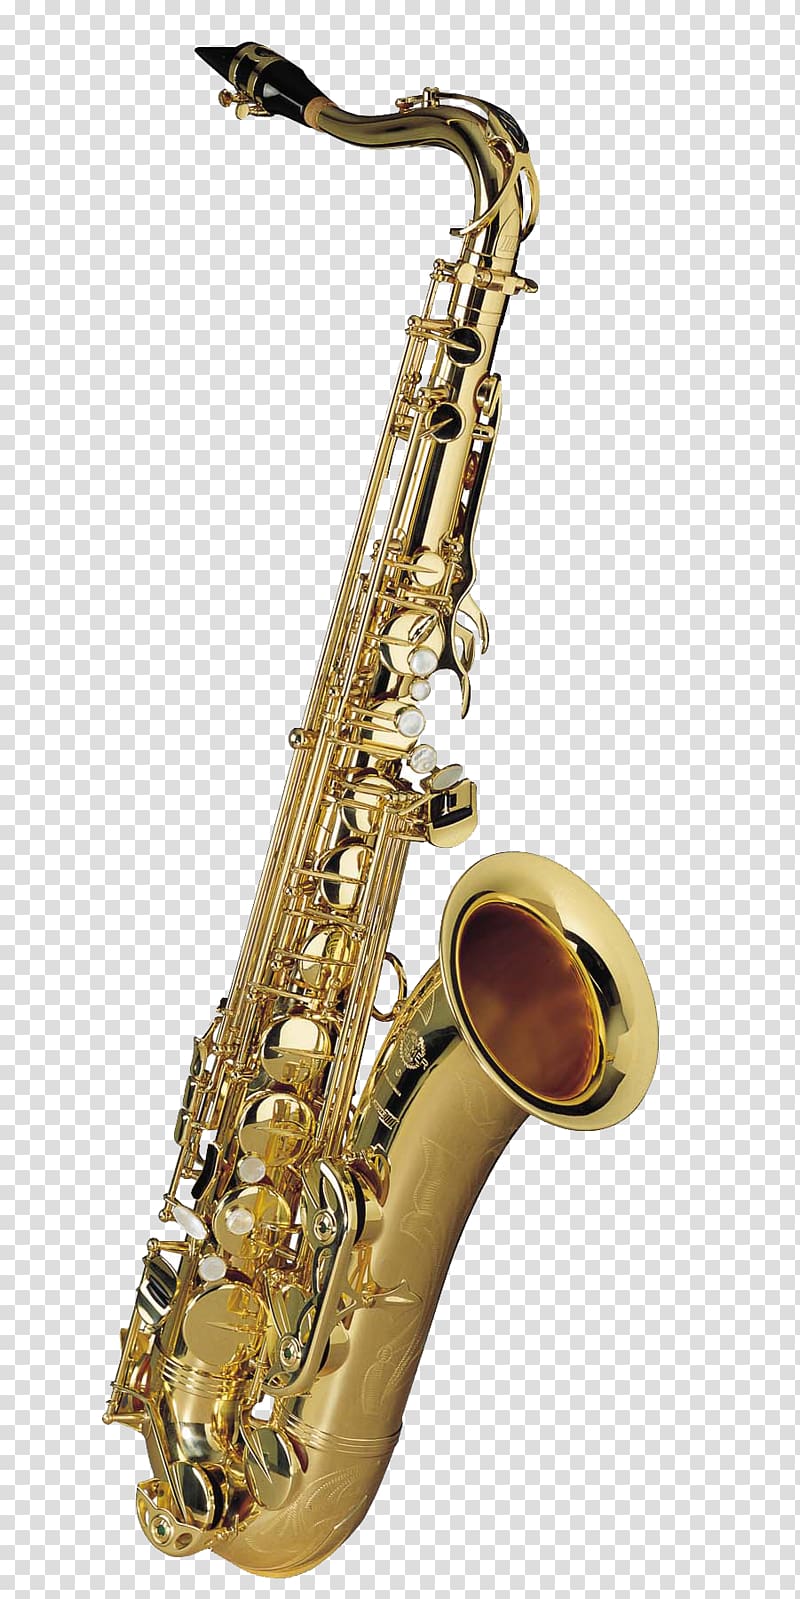 Tenor saxophone Henri Selmer Paris Musical Instruments, trumpet and saxophone transparent background PNG clipart